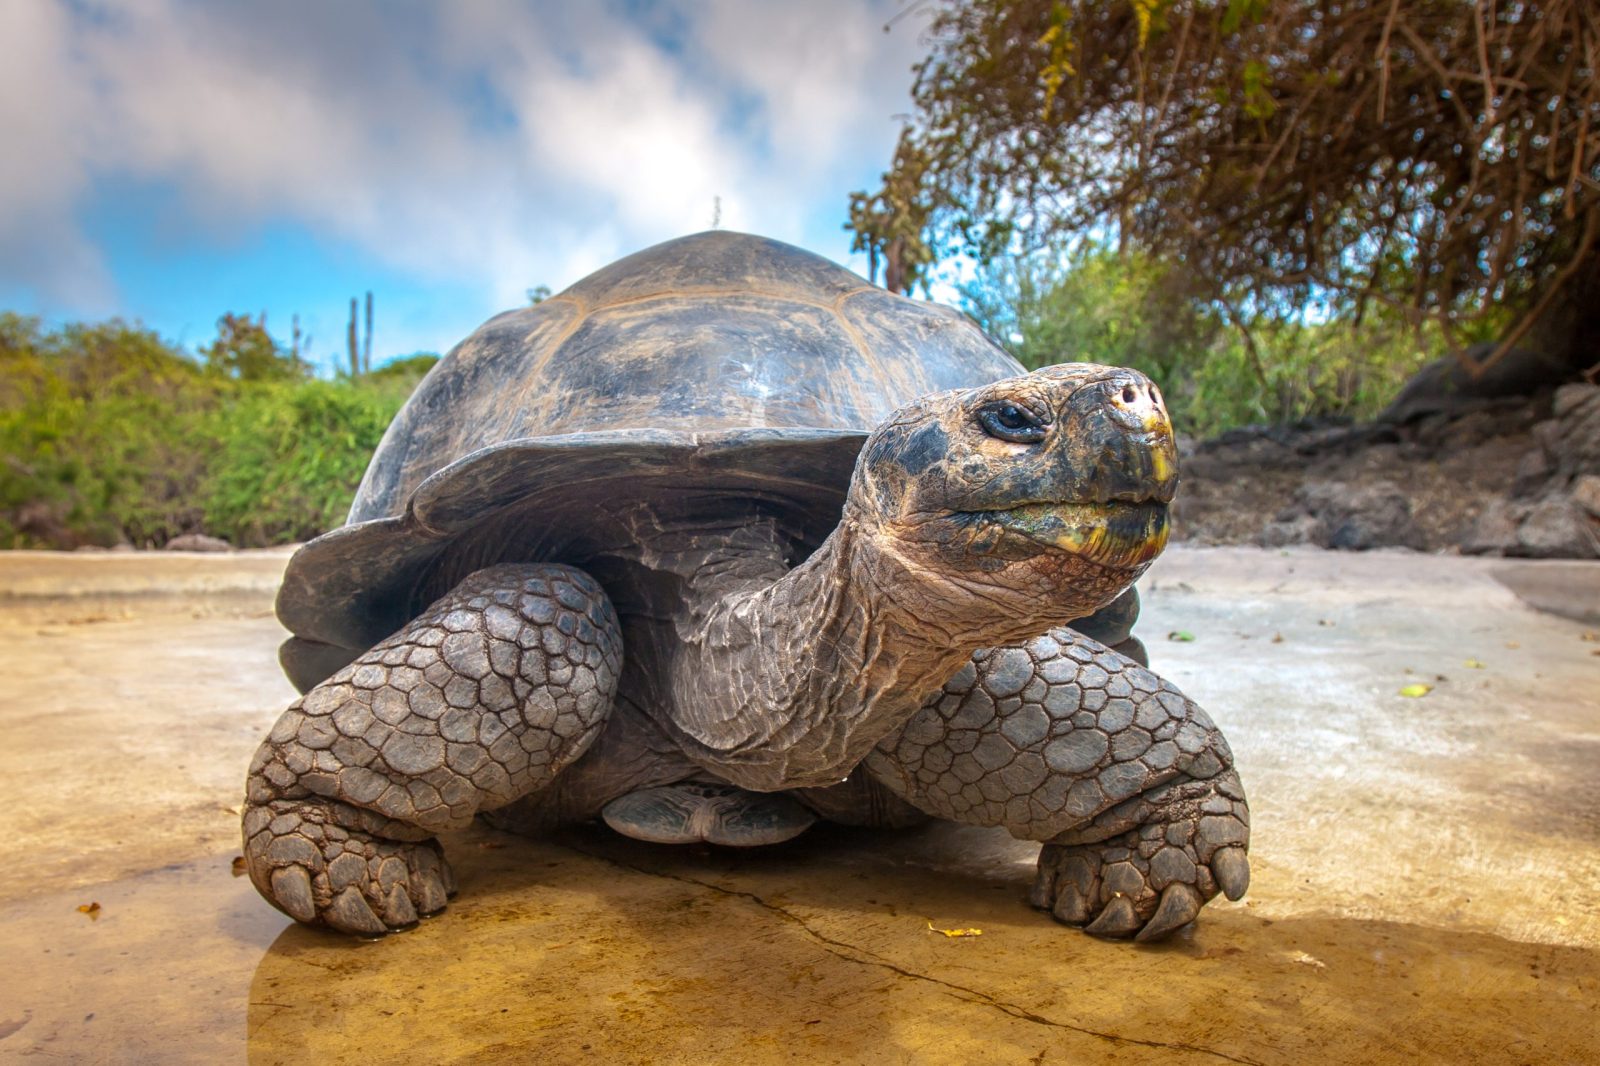 Tortoise walking on sand